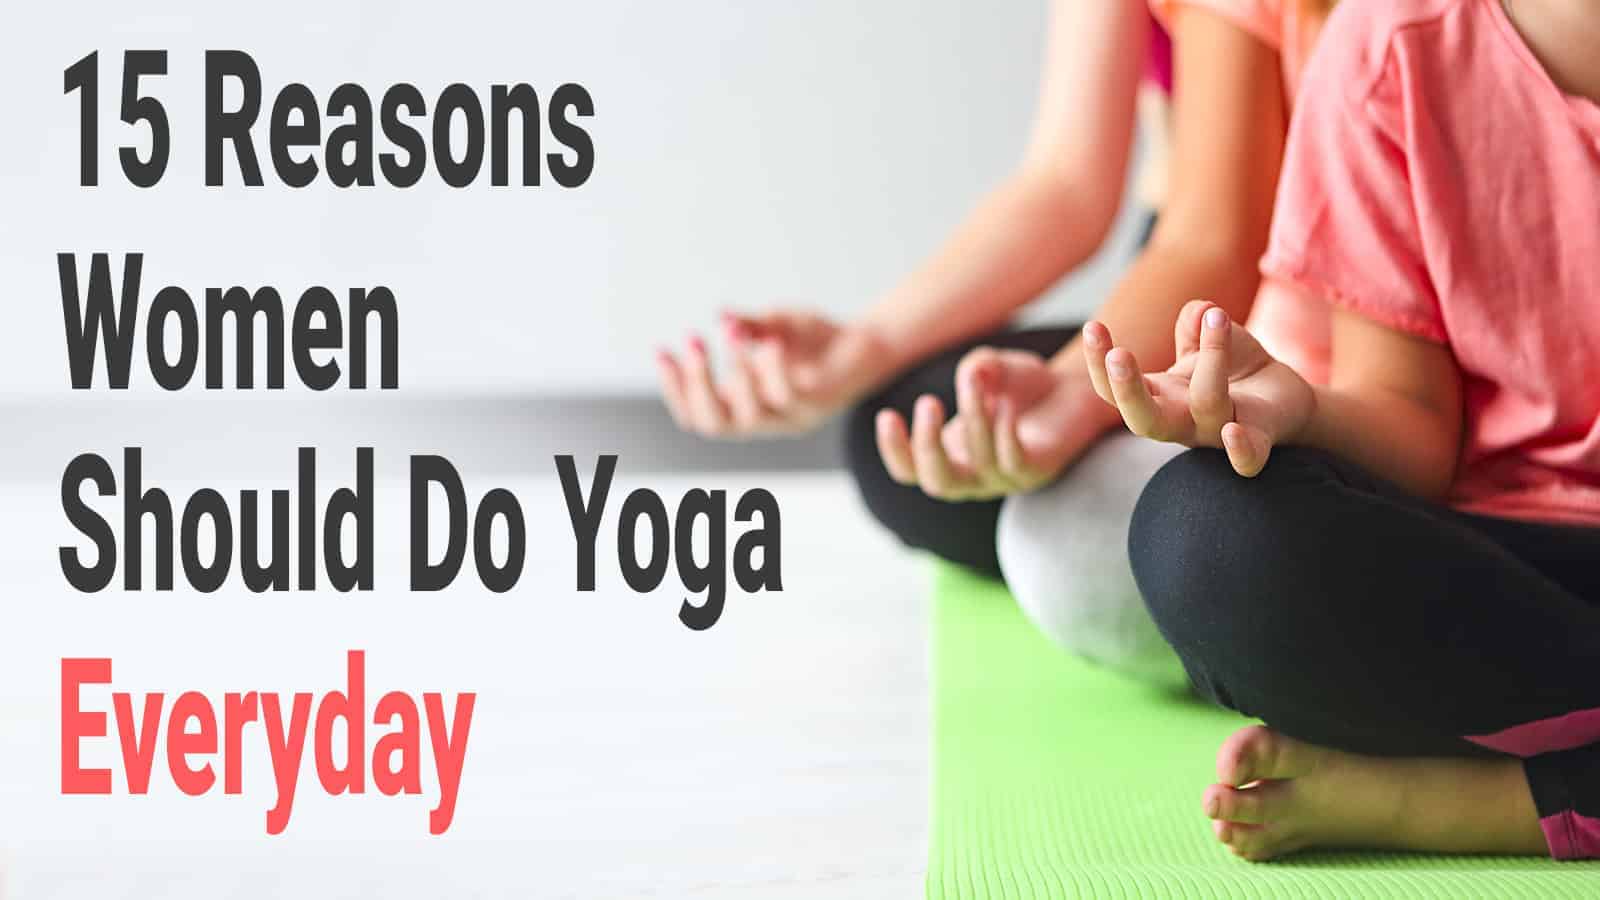 15 Reasons Women Should Do Yoga Everyday